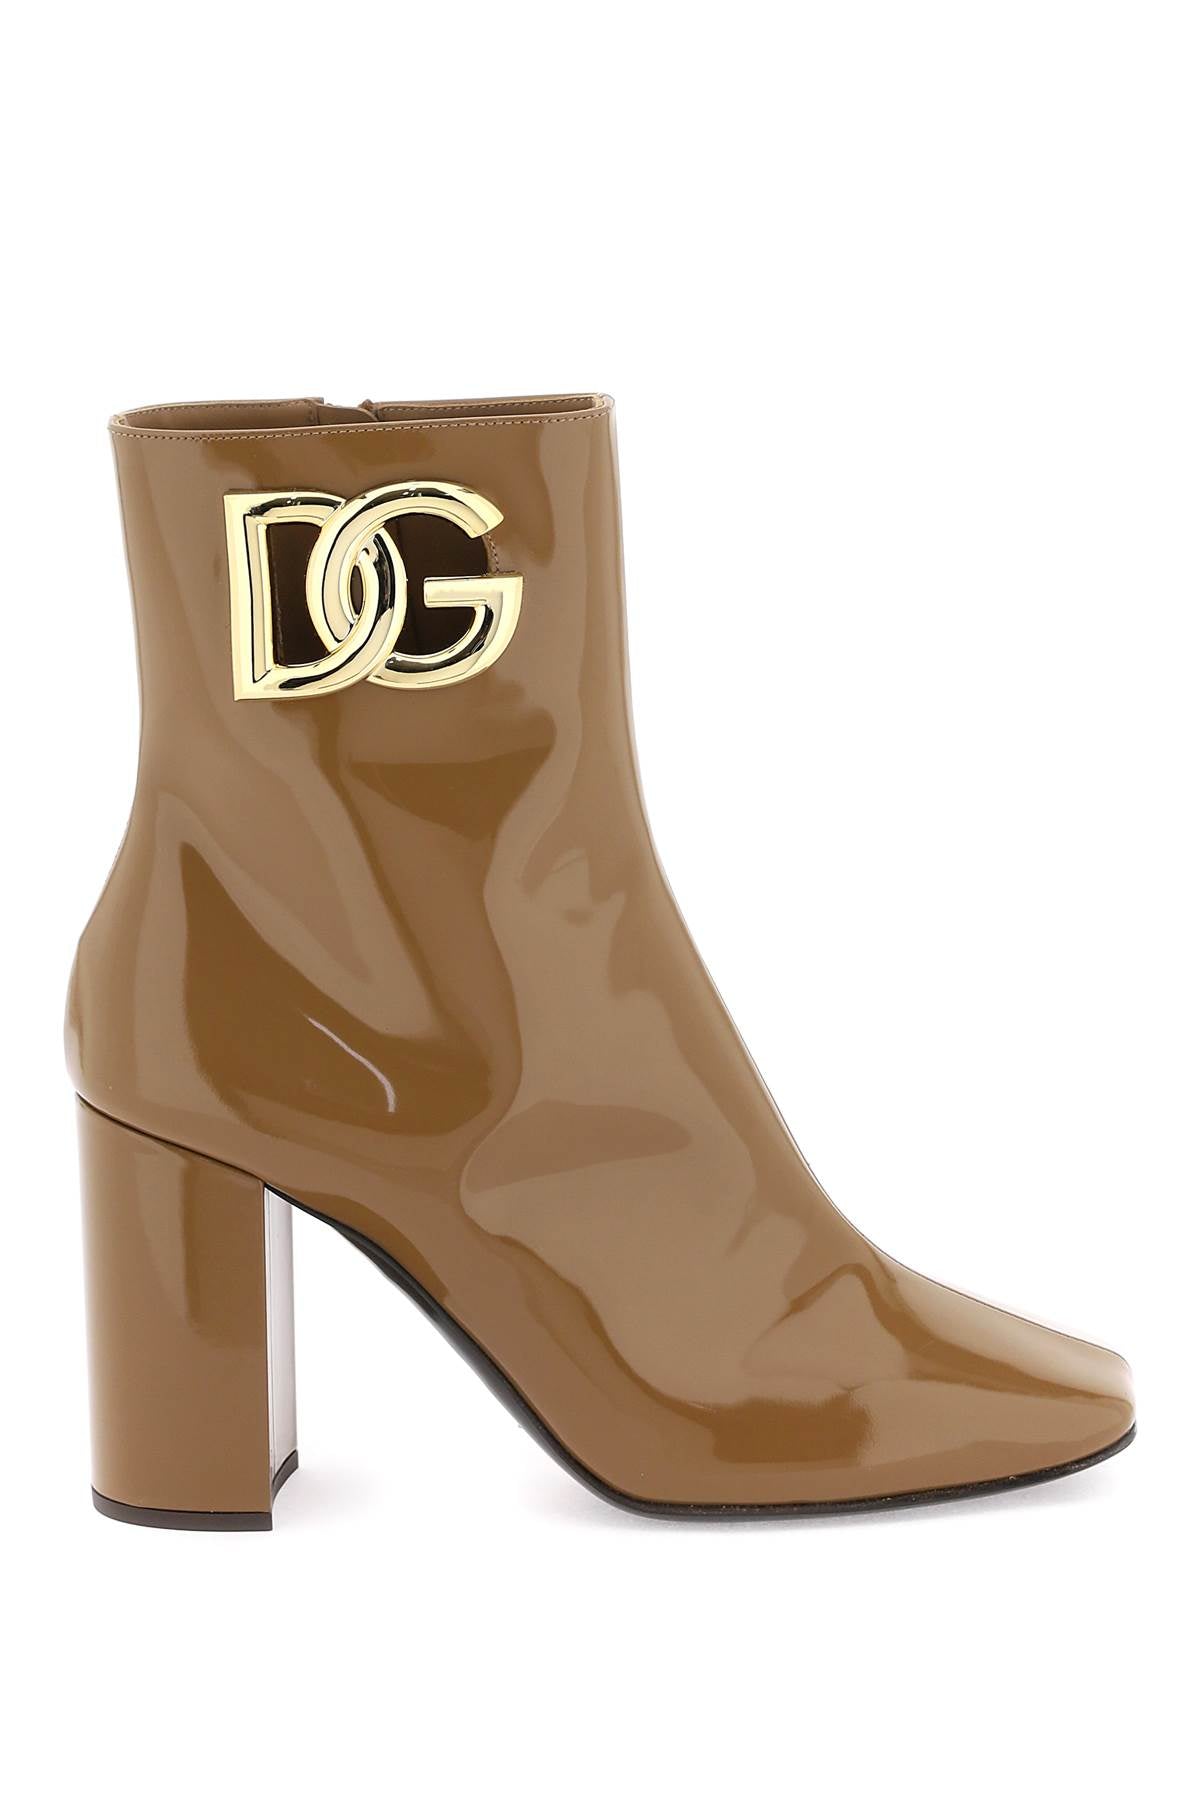 Dolce & gabbana dg logo ankle boots CT1001 A1037 CARAMELLO